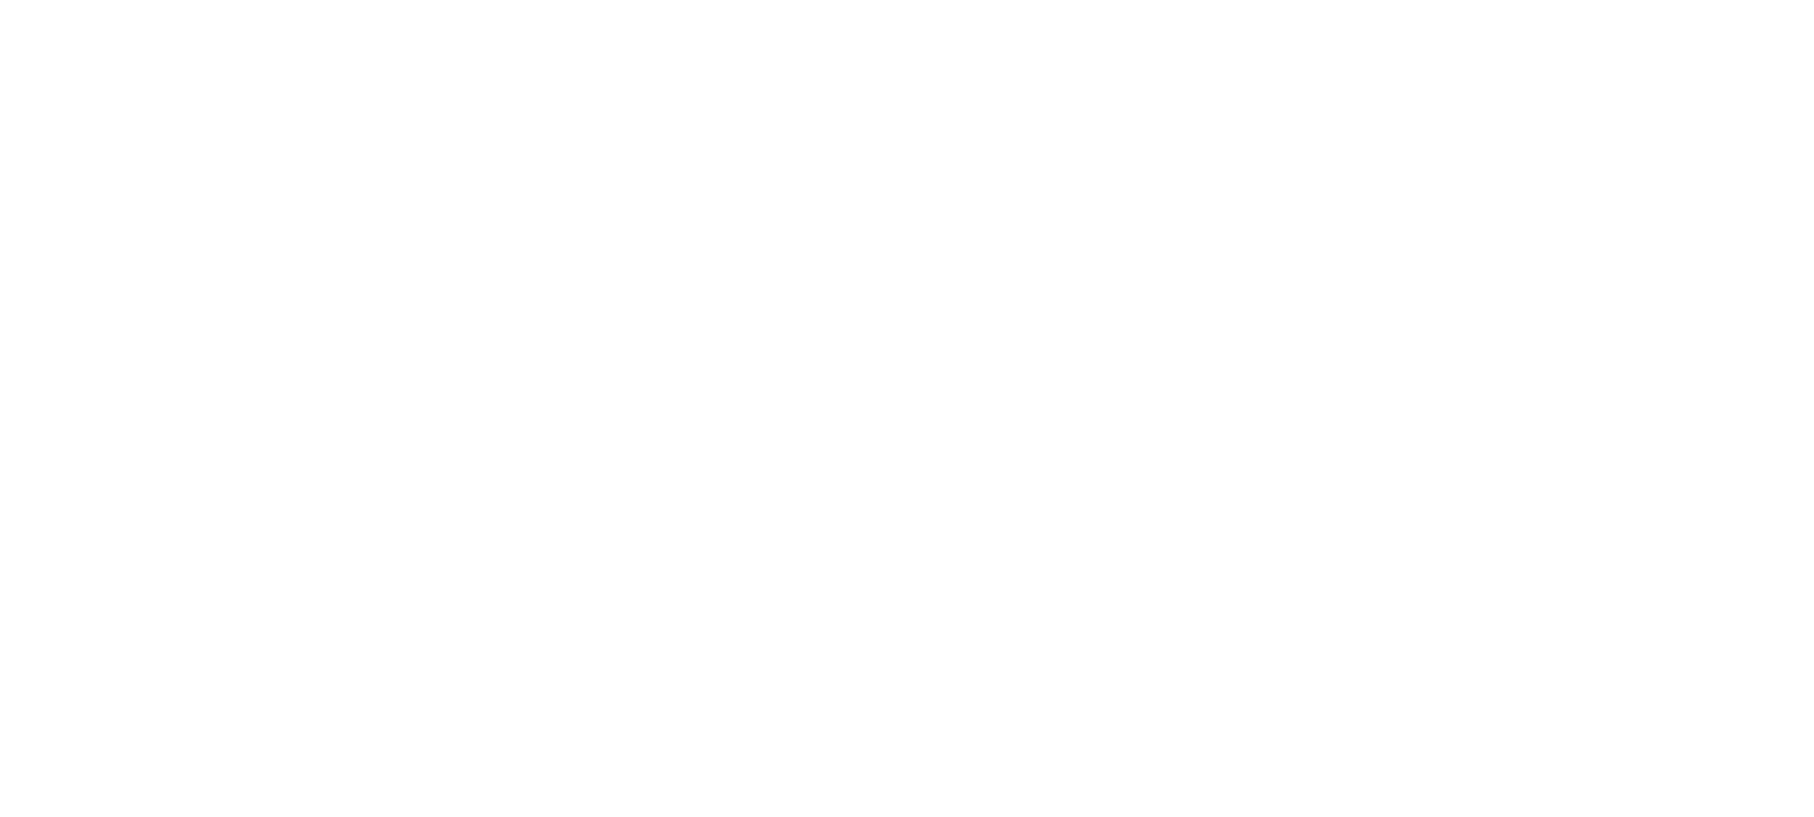 AWE Academy for Women Entrepreneurs